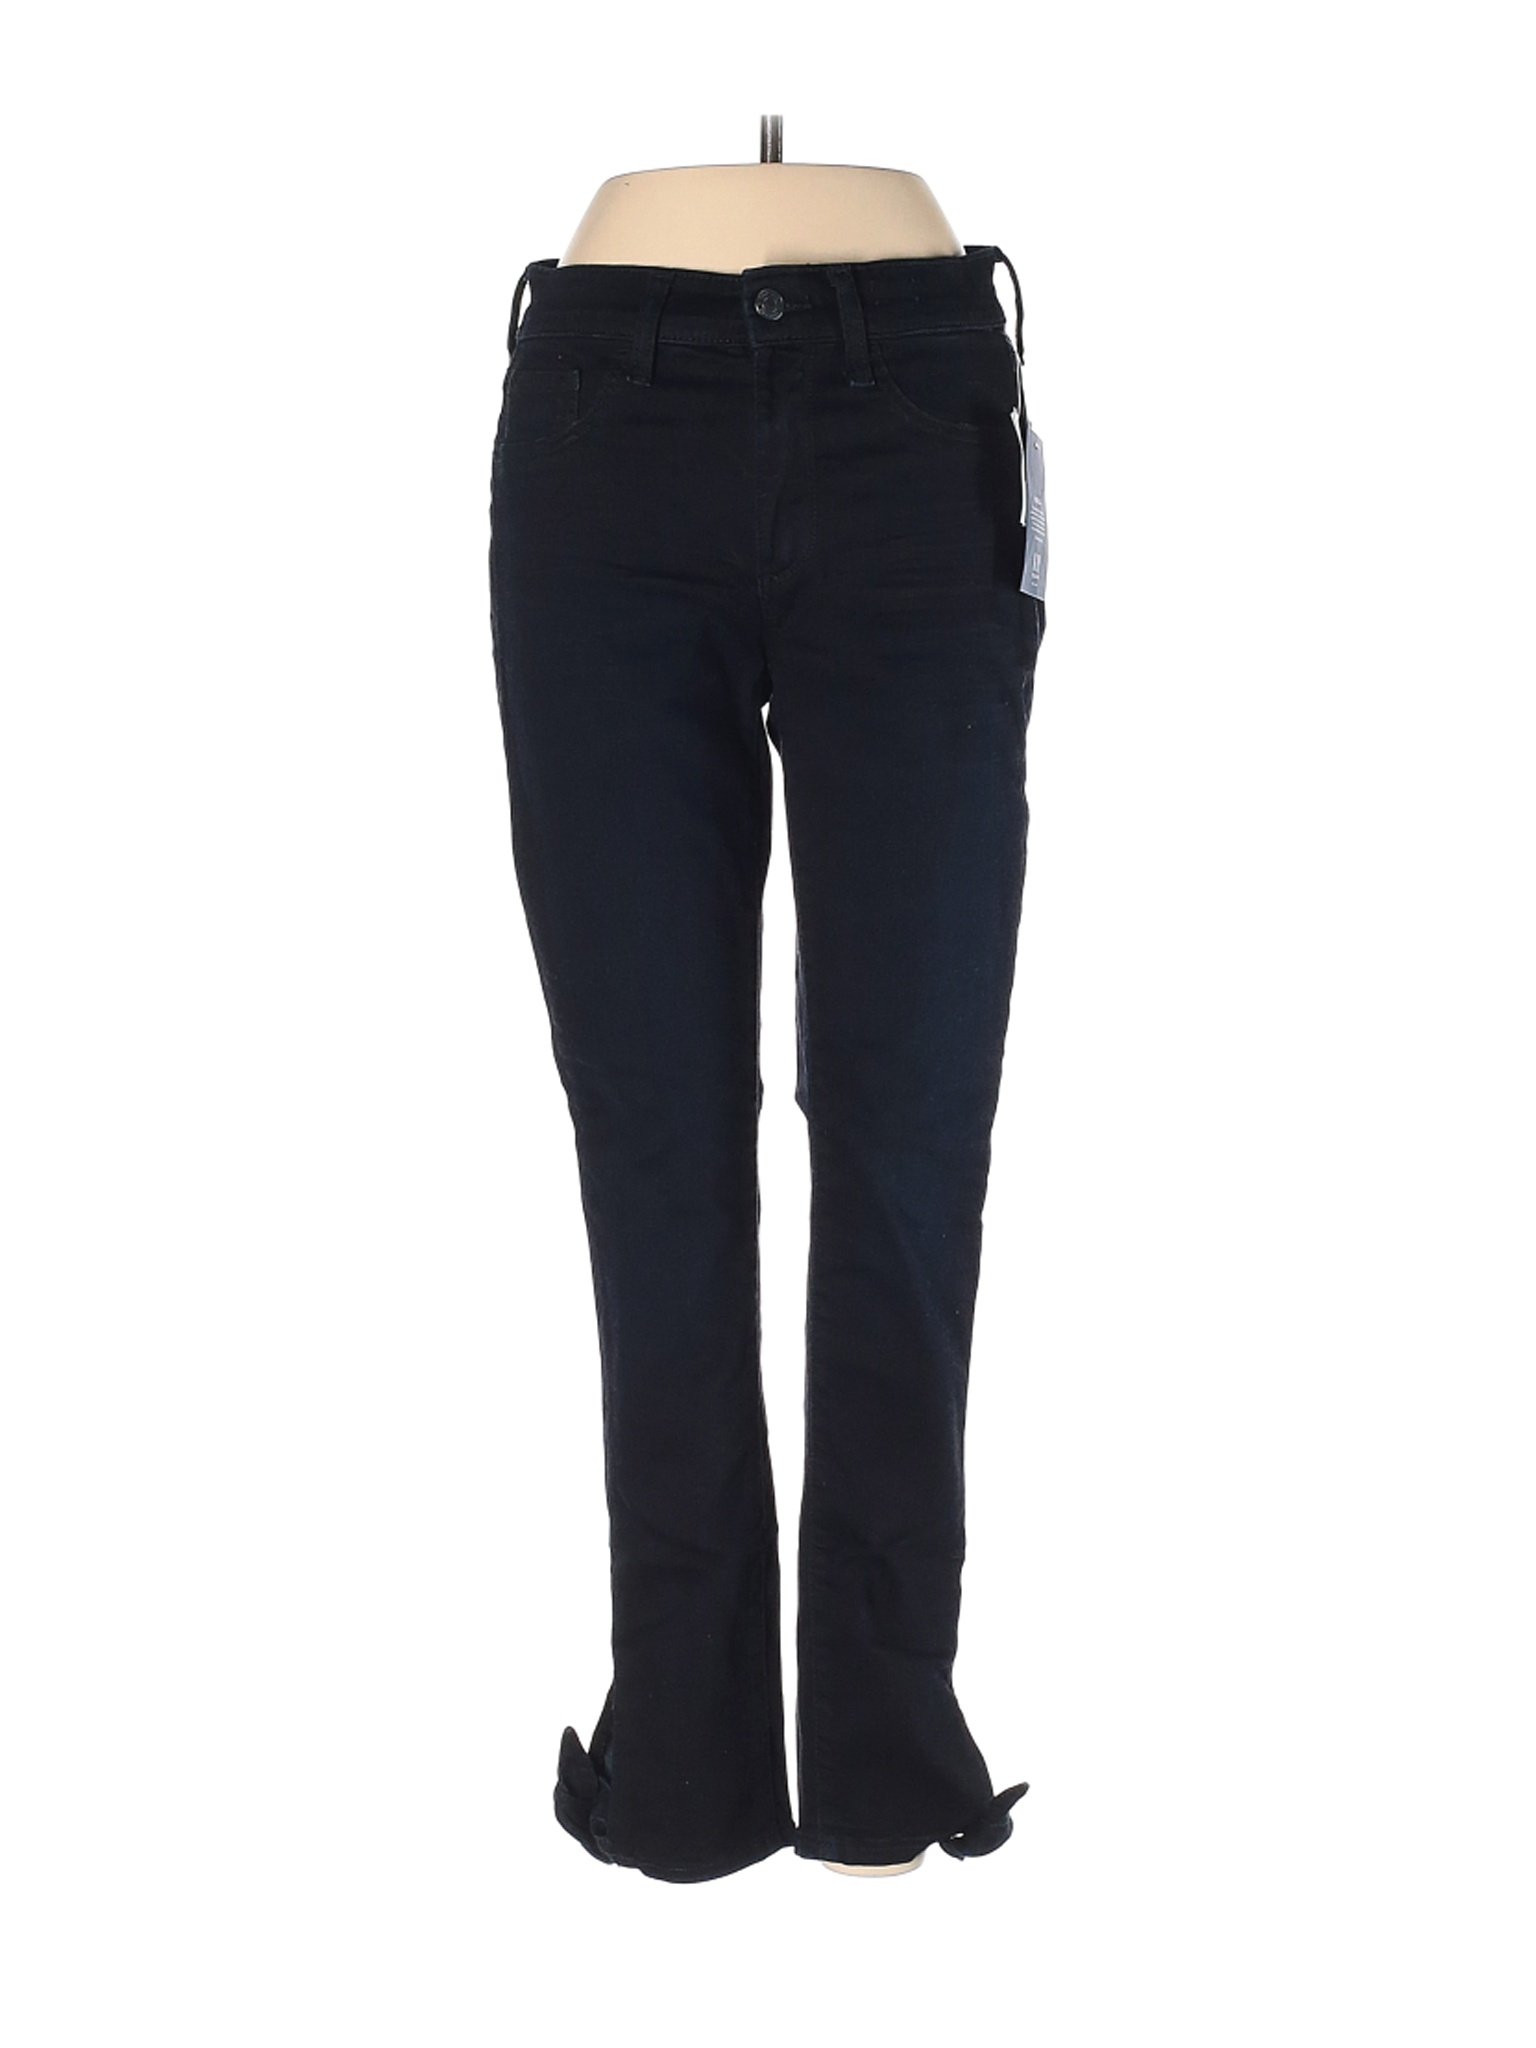 NWT Gap Women Black Jeans 26W | eBay